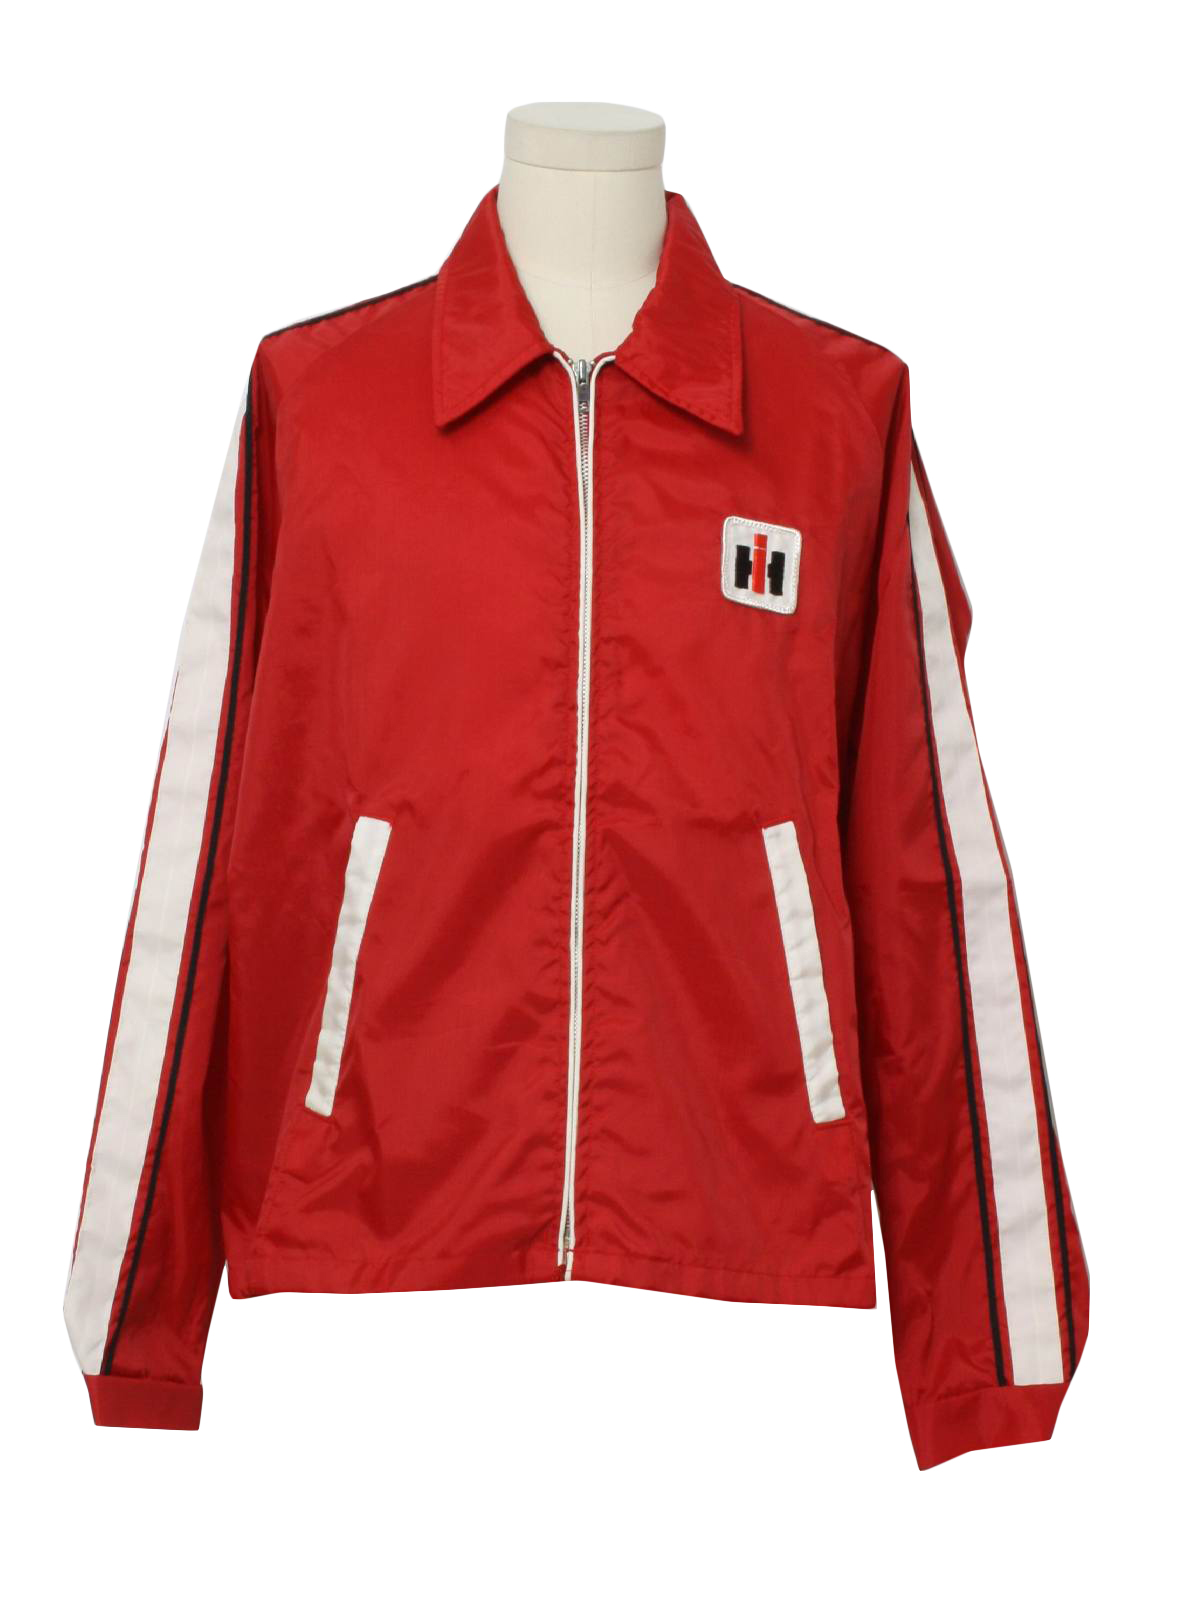 Retro 1980's Jacket (Swingster) : 80s -Swingster- Mens red, longsleeve ...